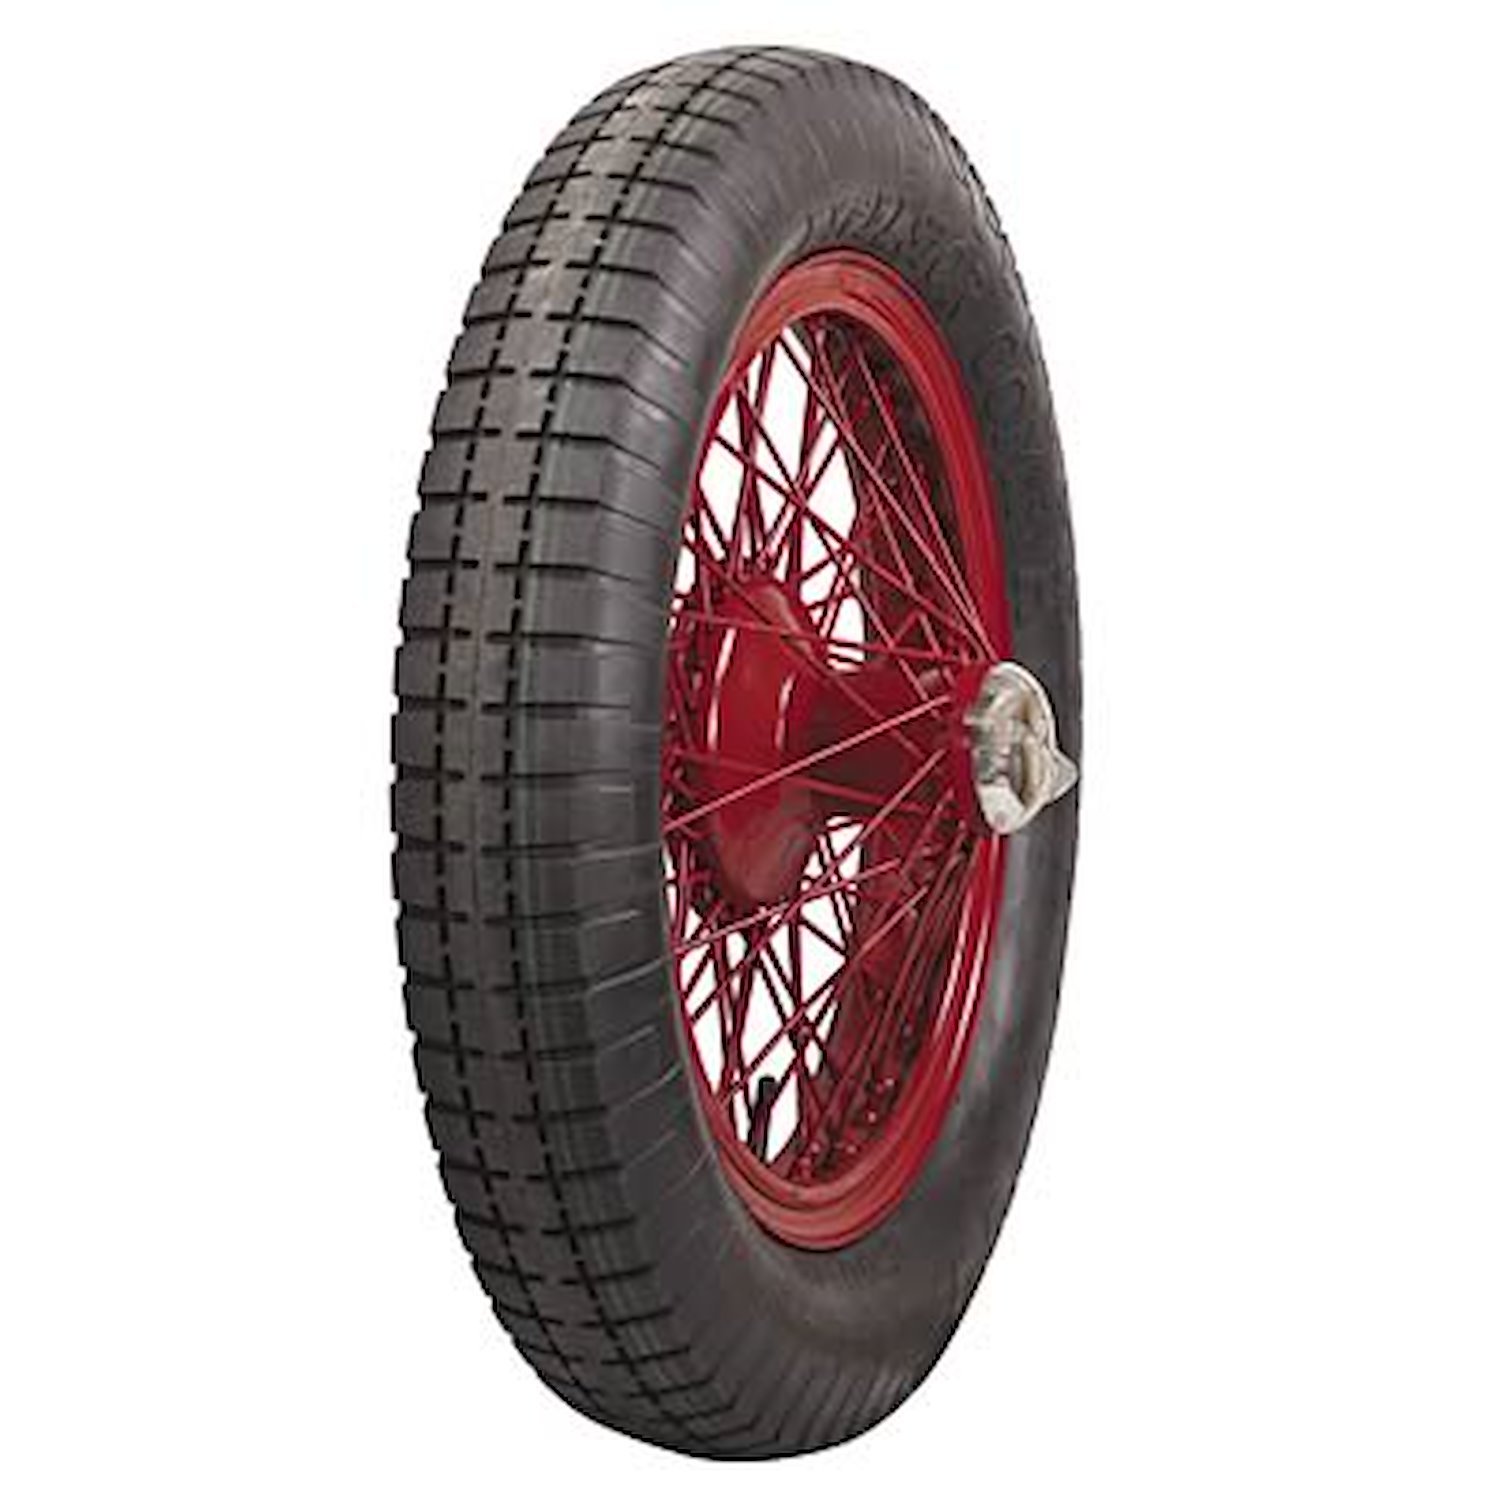 728938 Tire, Excelsior Comp H, 400-19